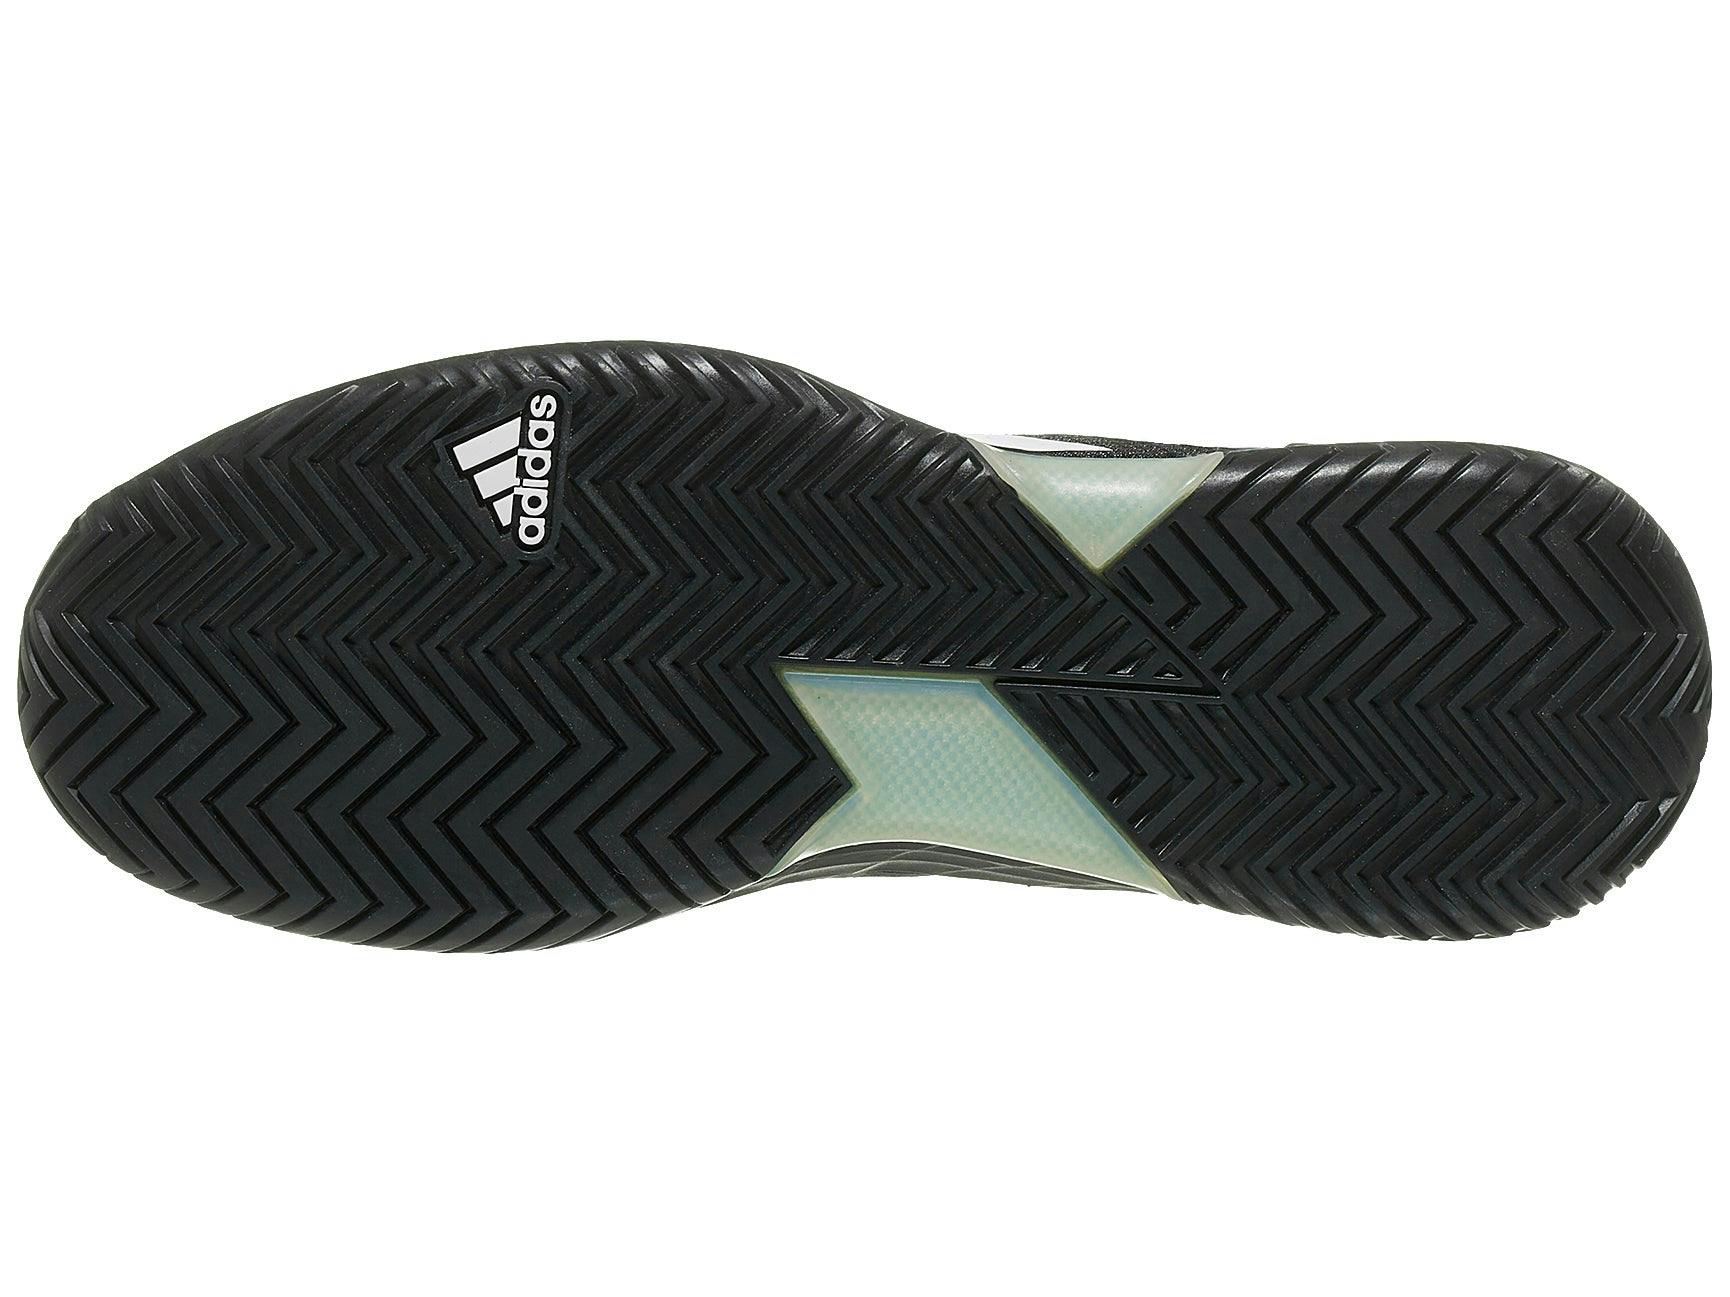 Adidas Men's Adizero Ubersonic 4 Tennis Shoes